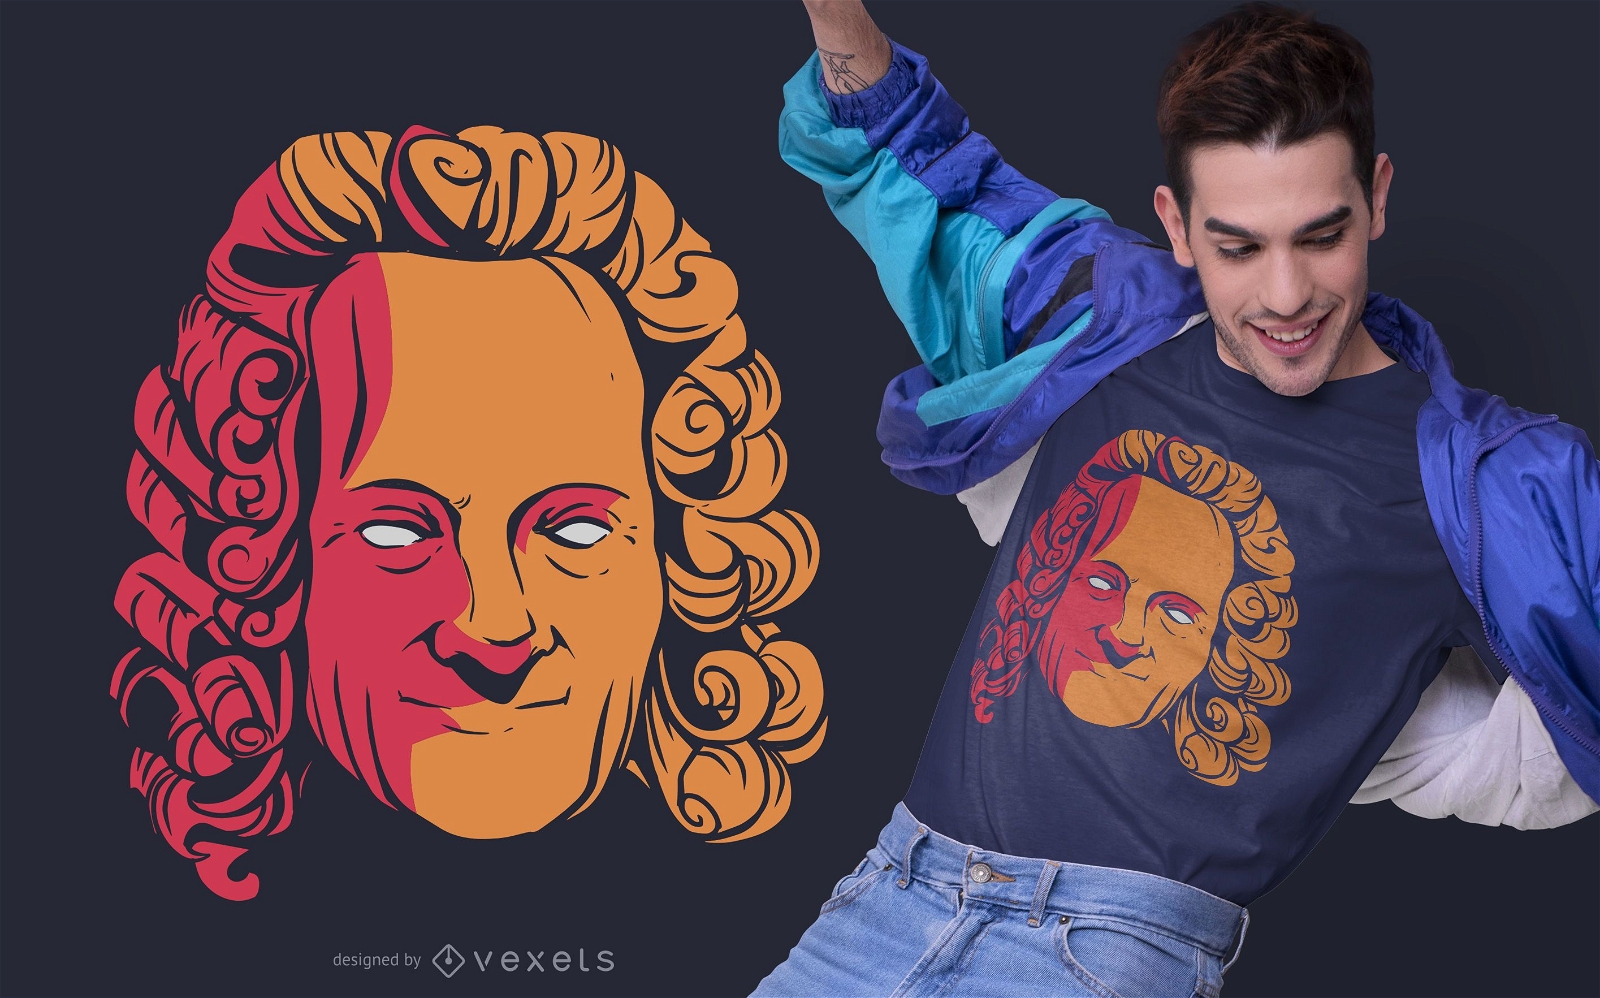 Voltaire Philosoph T-Shirt Design